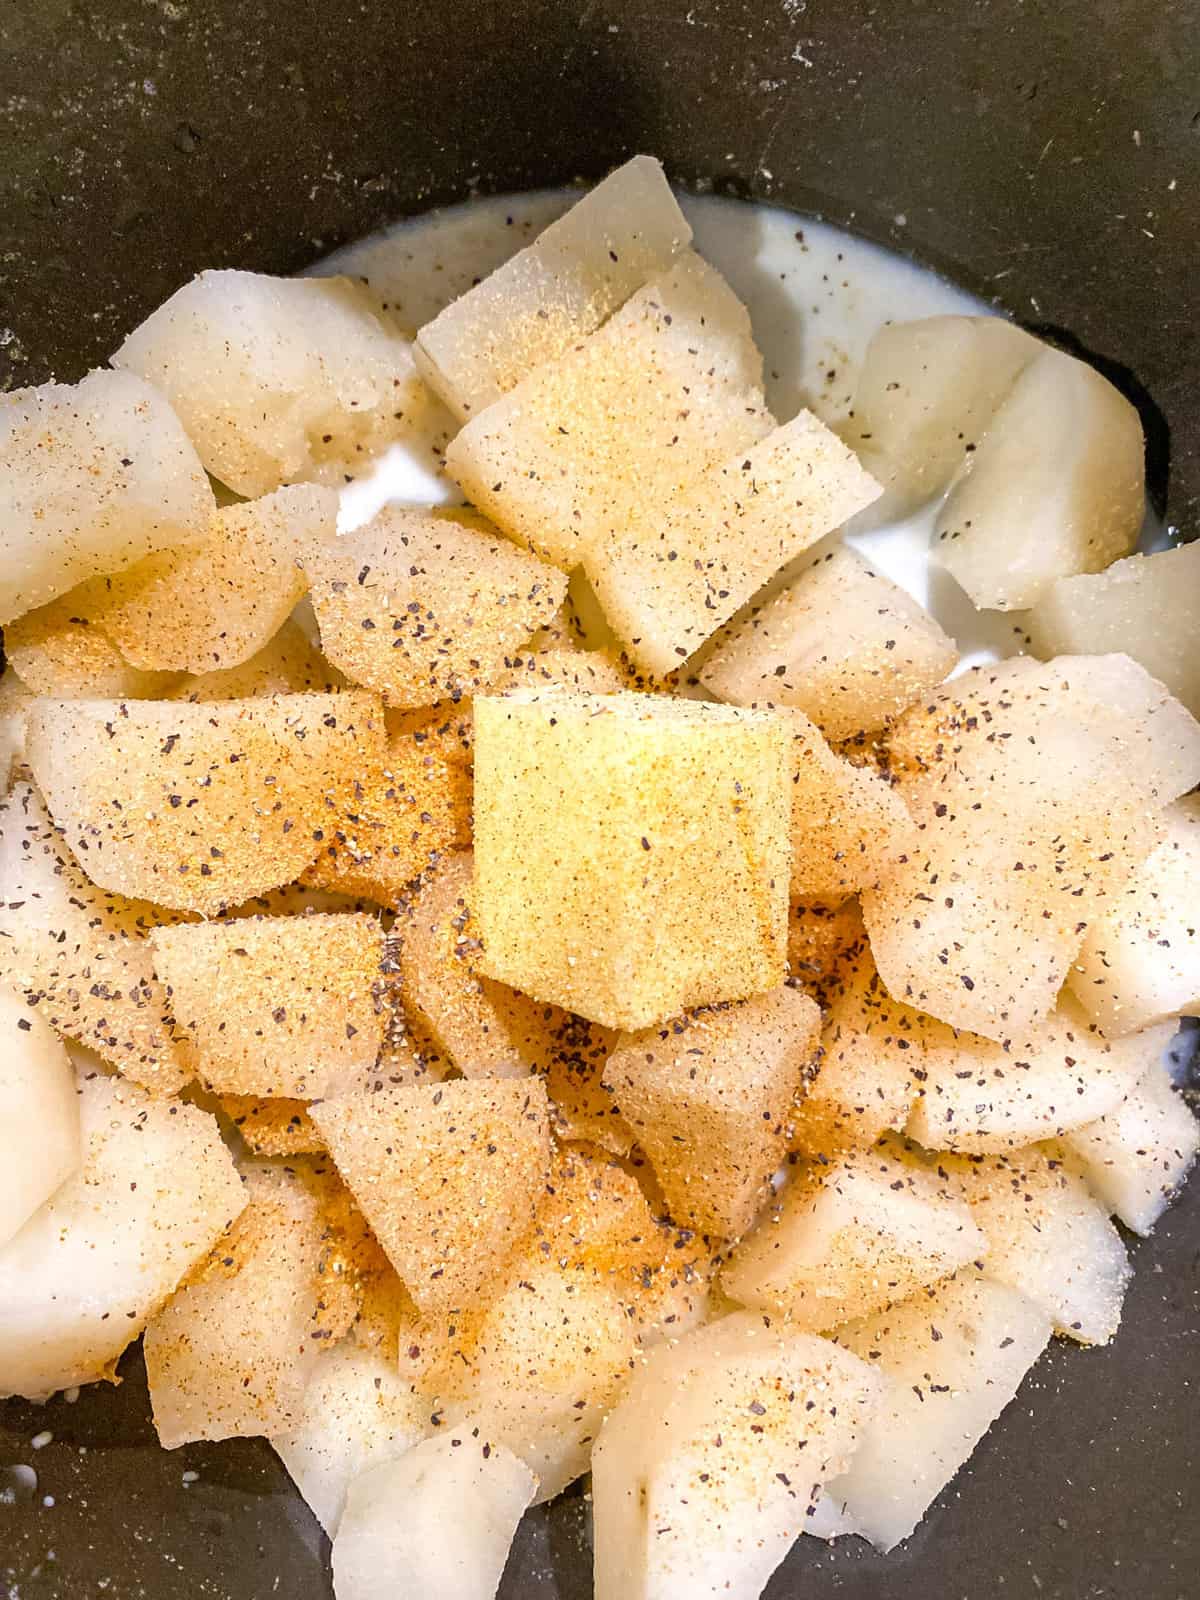 cooking potatoes to make mashed potatoes